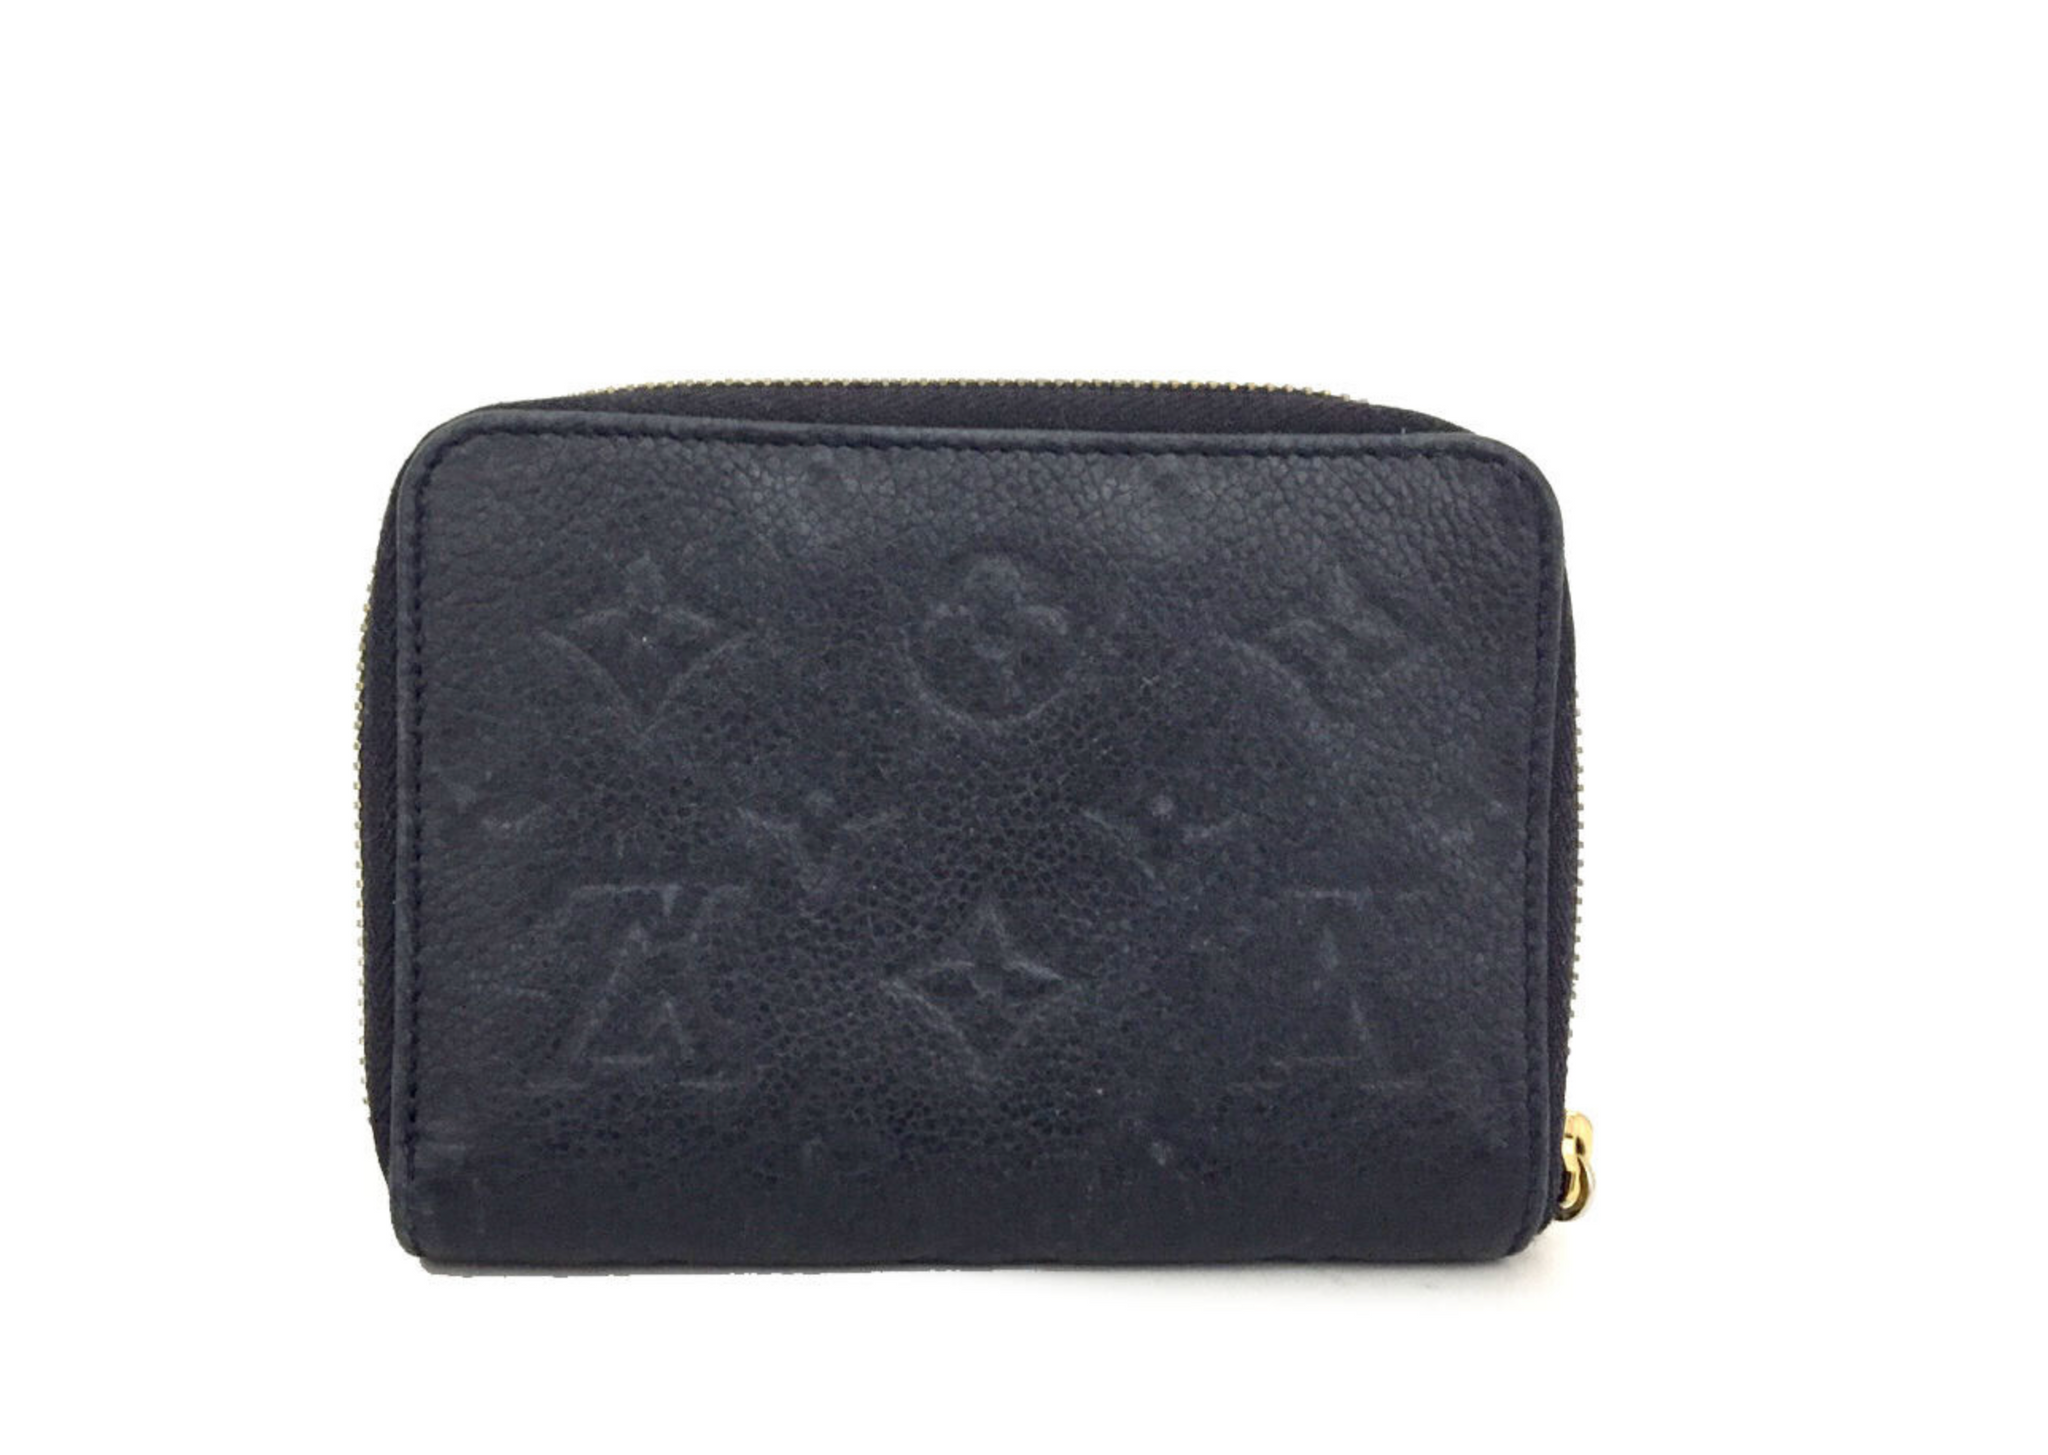 Sell Louis Vuitton Empreinte Compact Curieuse Wallet - Black